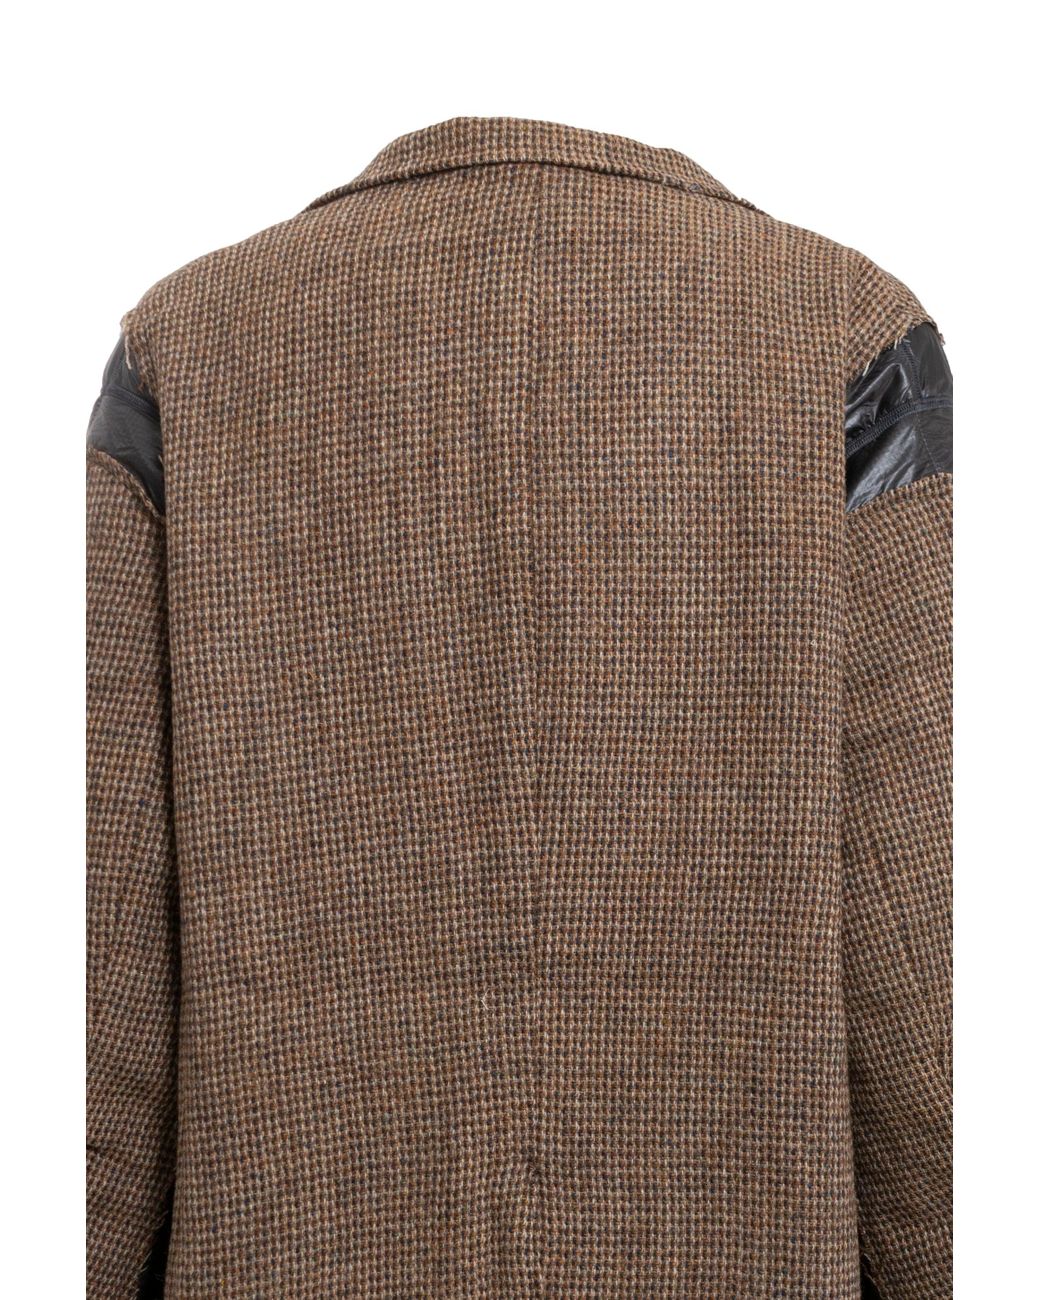 Rebuild by Needles Tweed Jacket -> Covered Coat in Brown for Men 